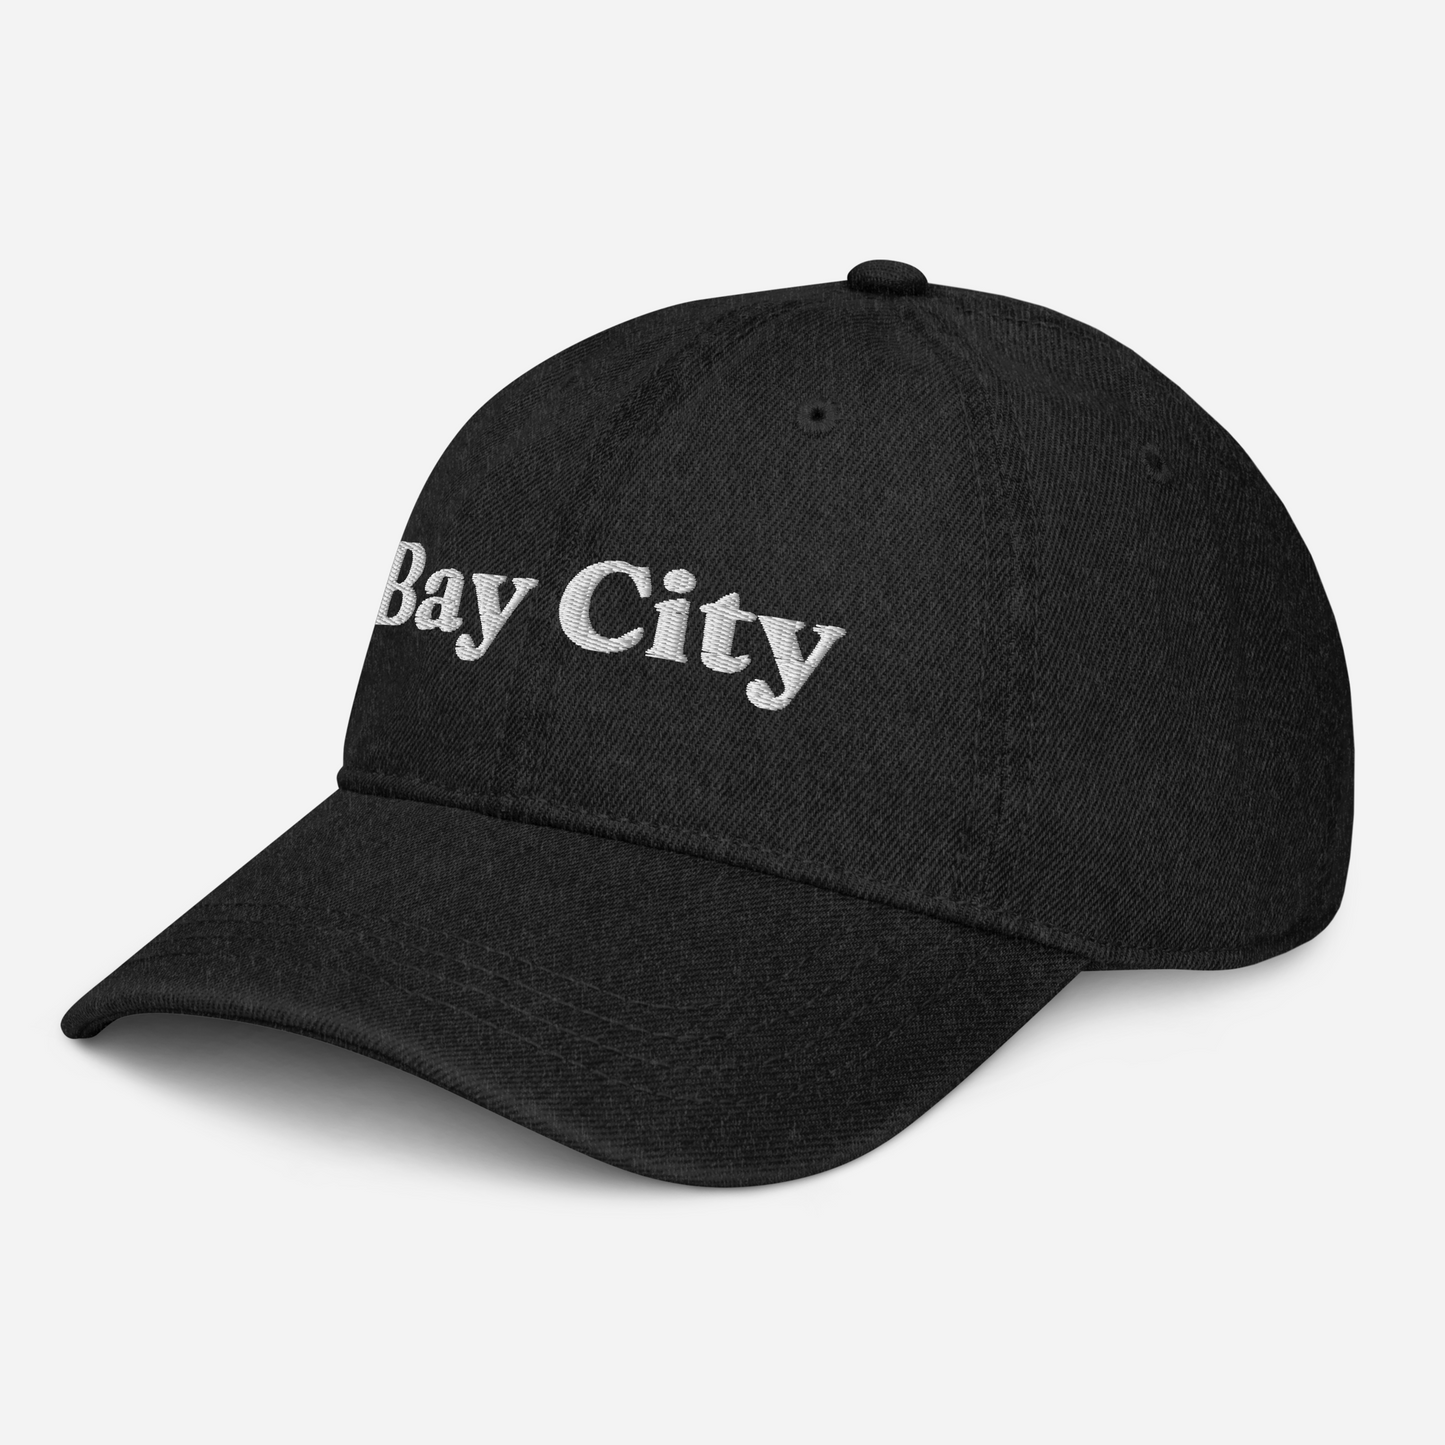 'Bay City' Denim Baseball Cap | White/Black Embroidery